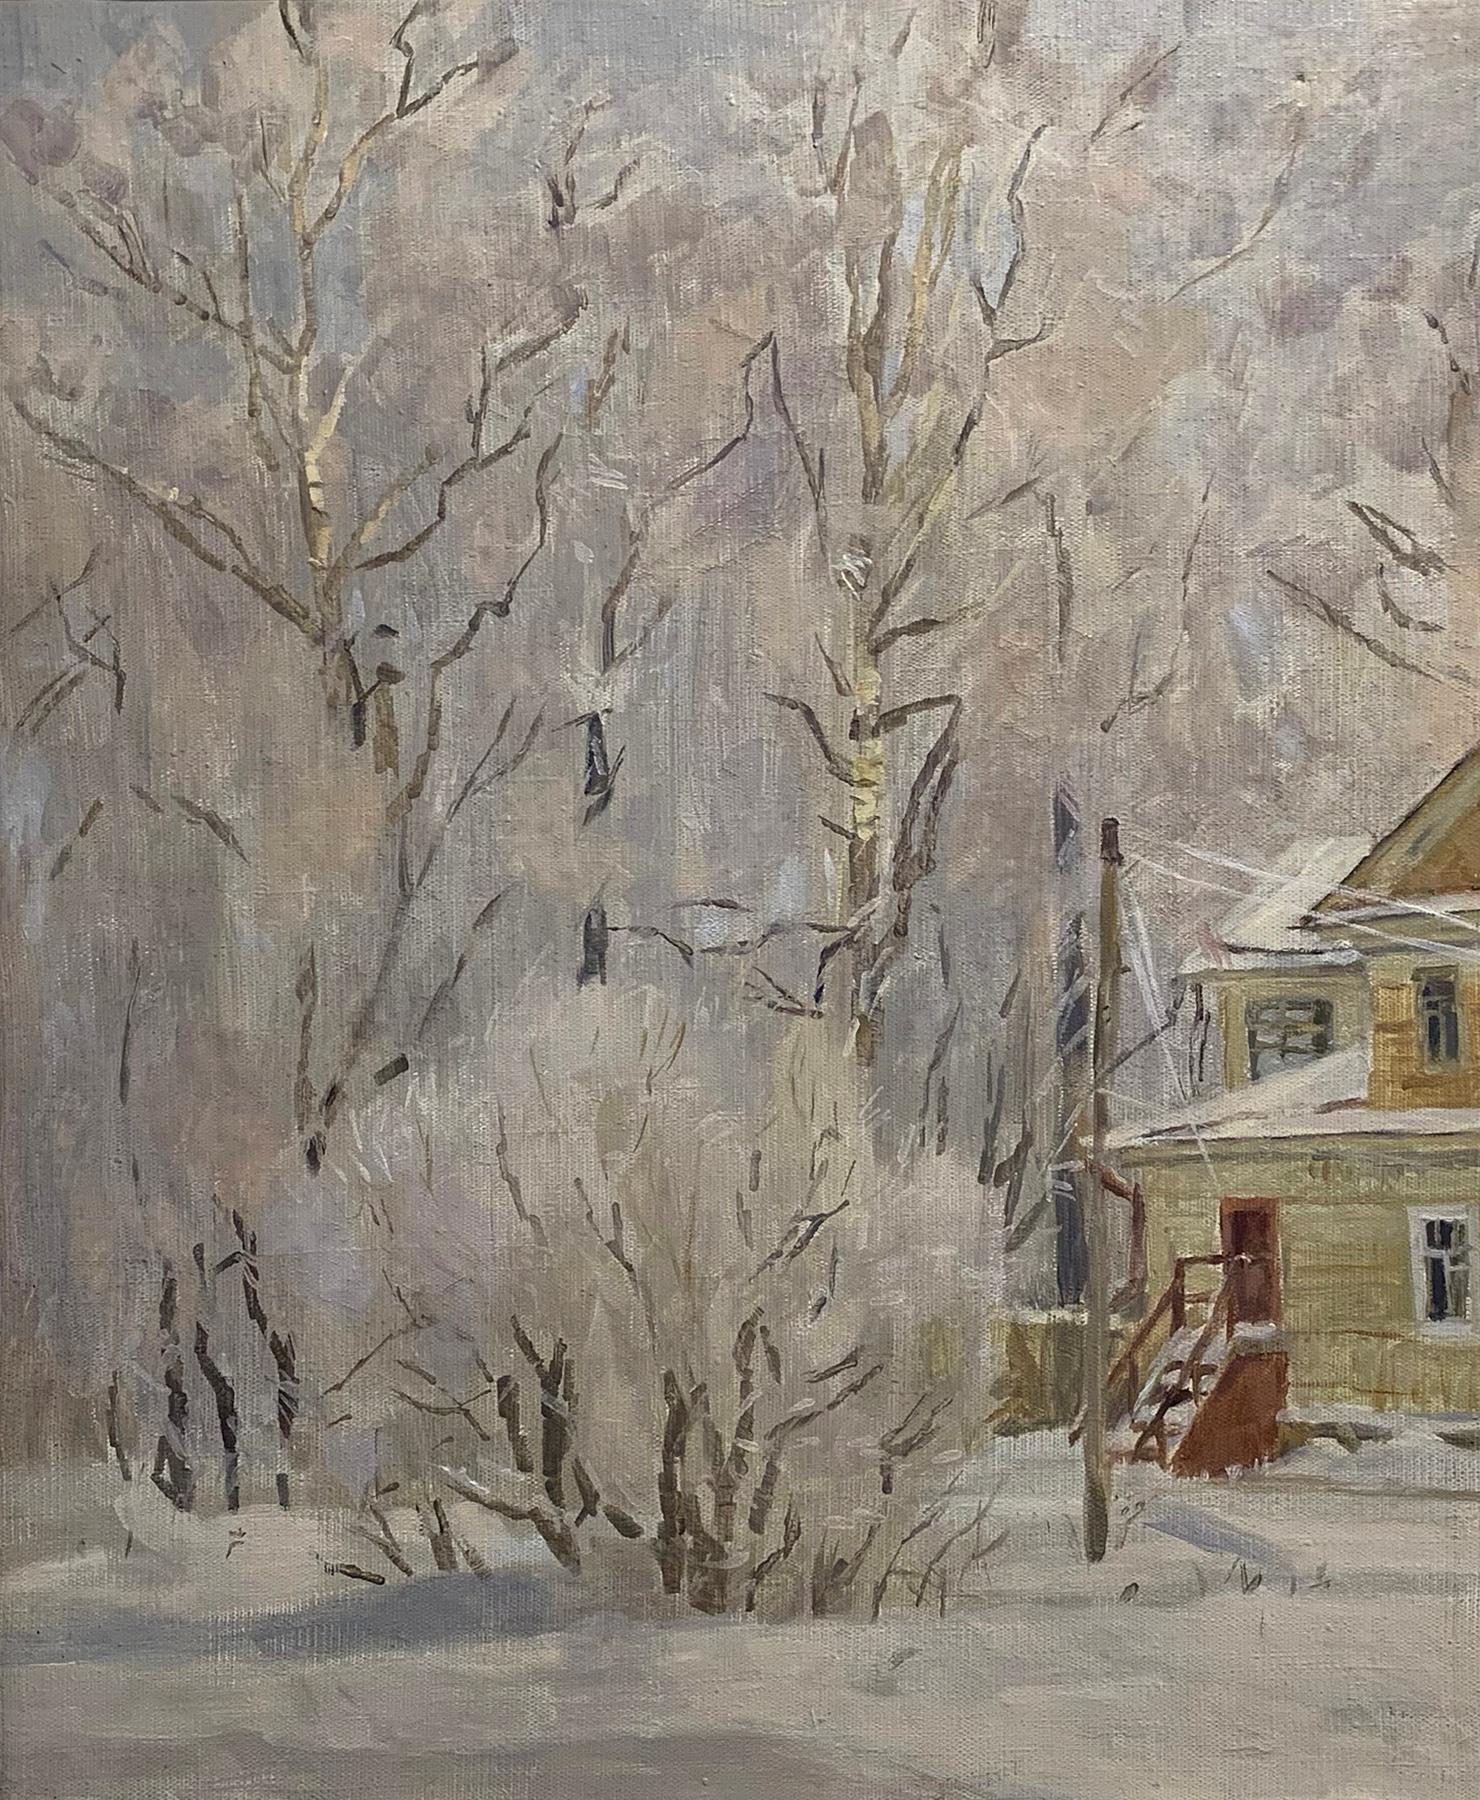 Frozen morning. 1988. Original modern art painting